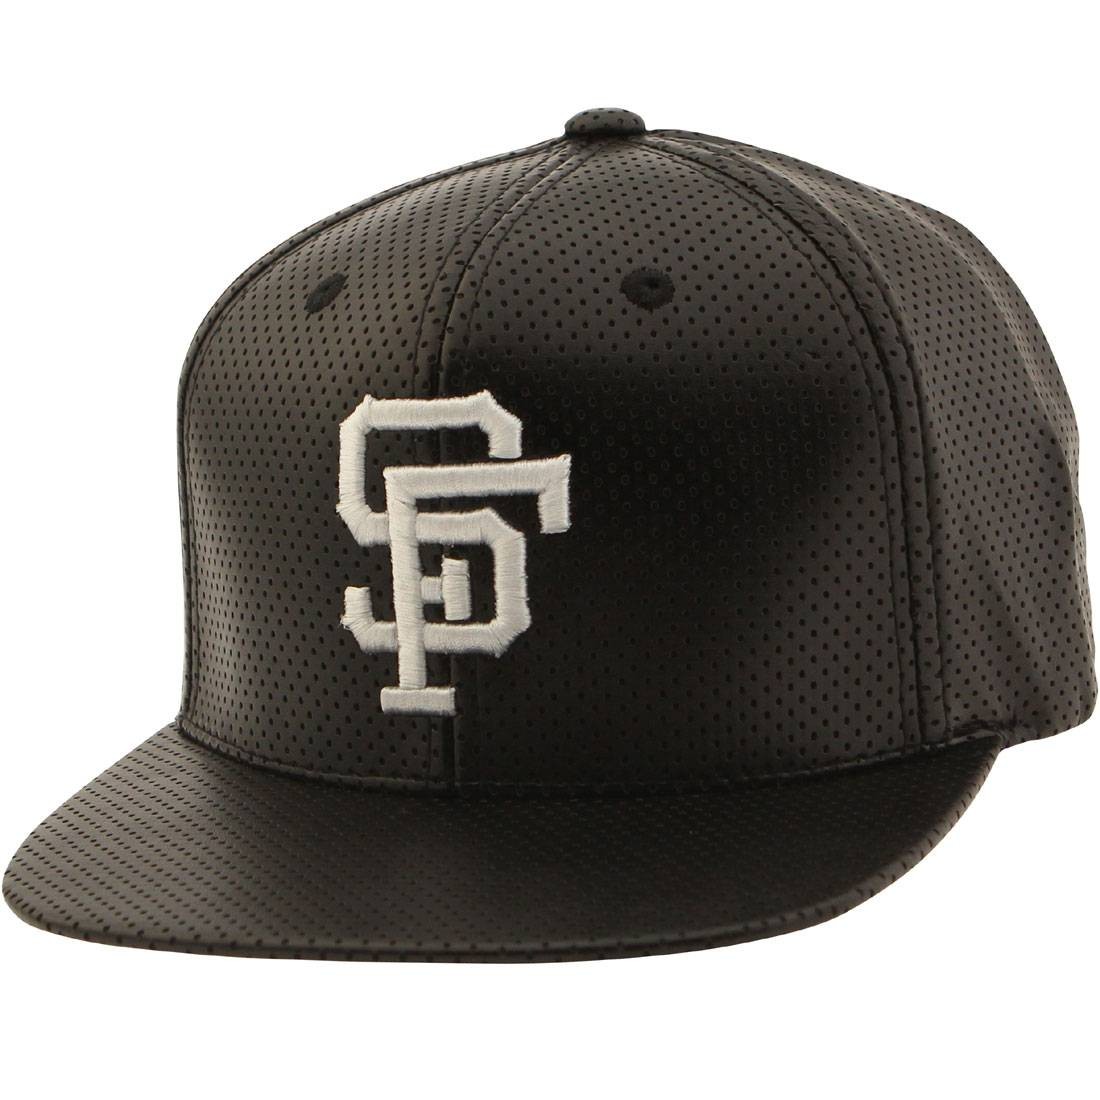 MLB San Francisco Giants Hat Cap Snapback Black White Embroidered